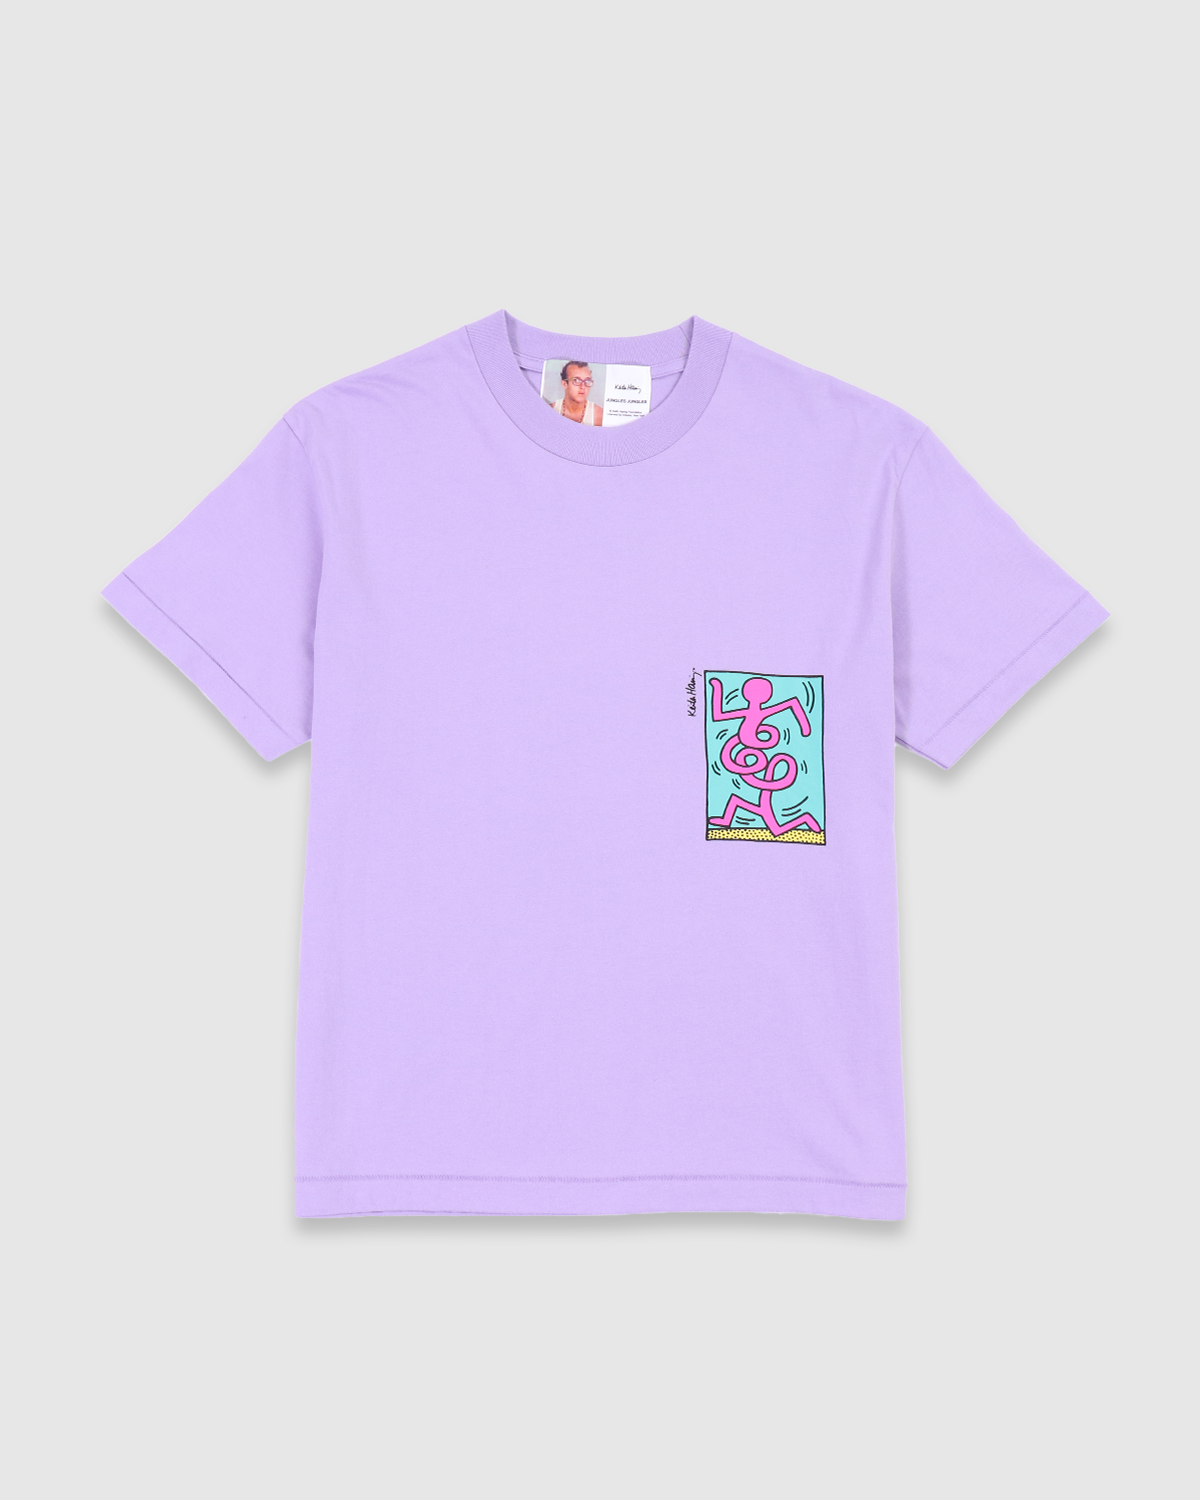 Phoenix Suns Vintage T-Shirt in Purple - Glue Store